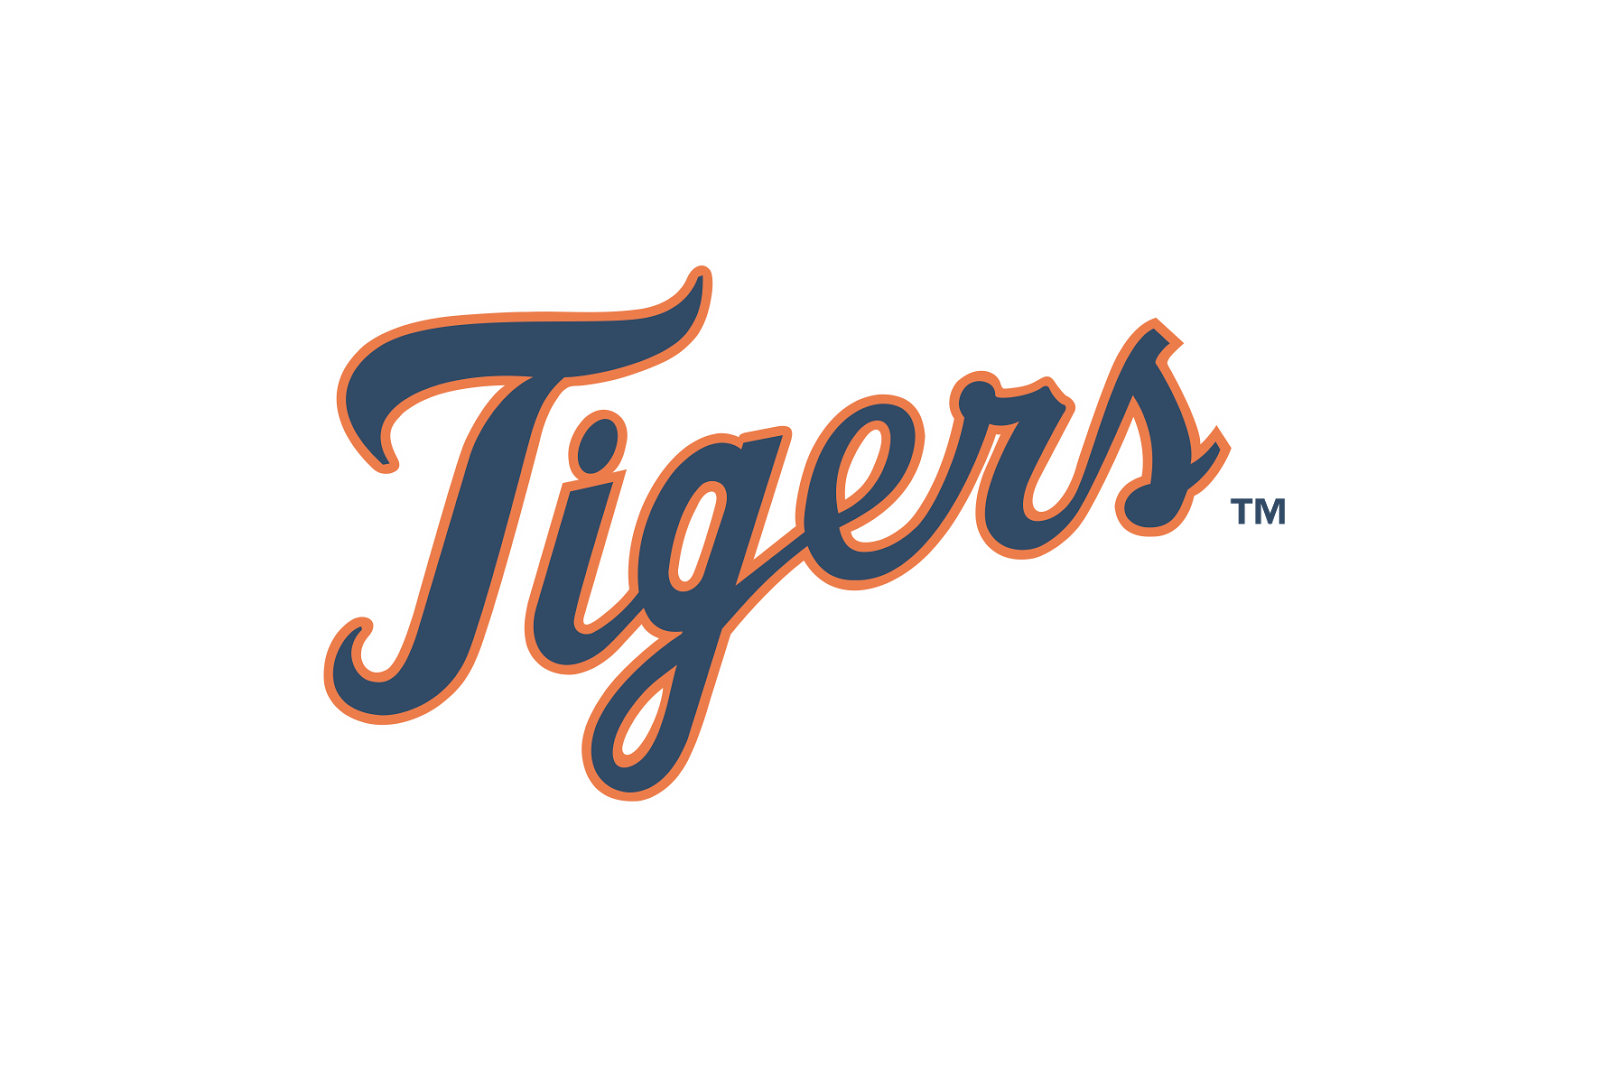 Detroit Tigers PNG Immagine di alta qualità